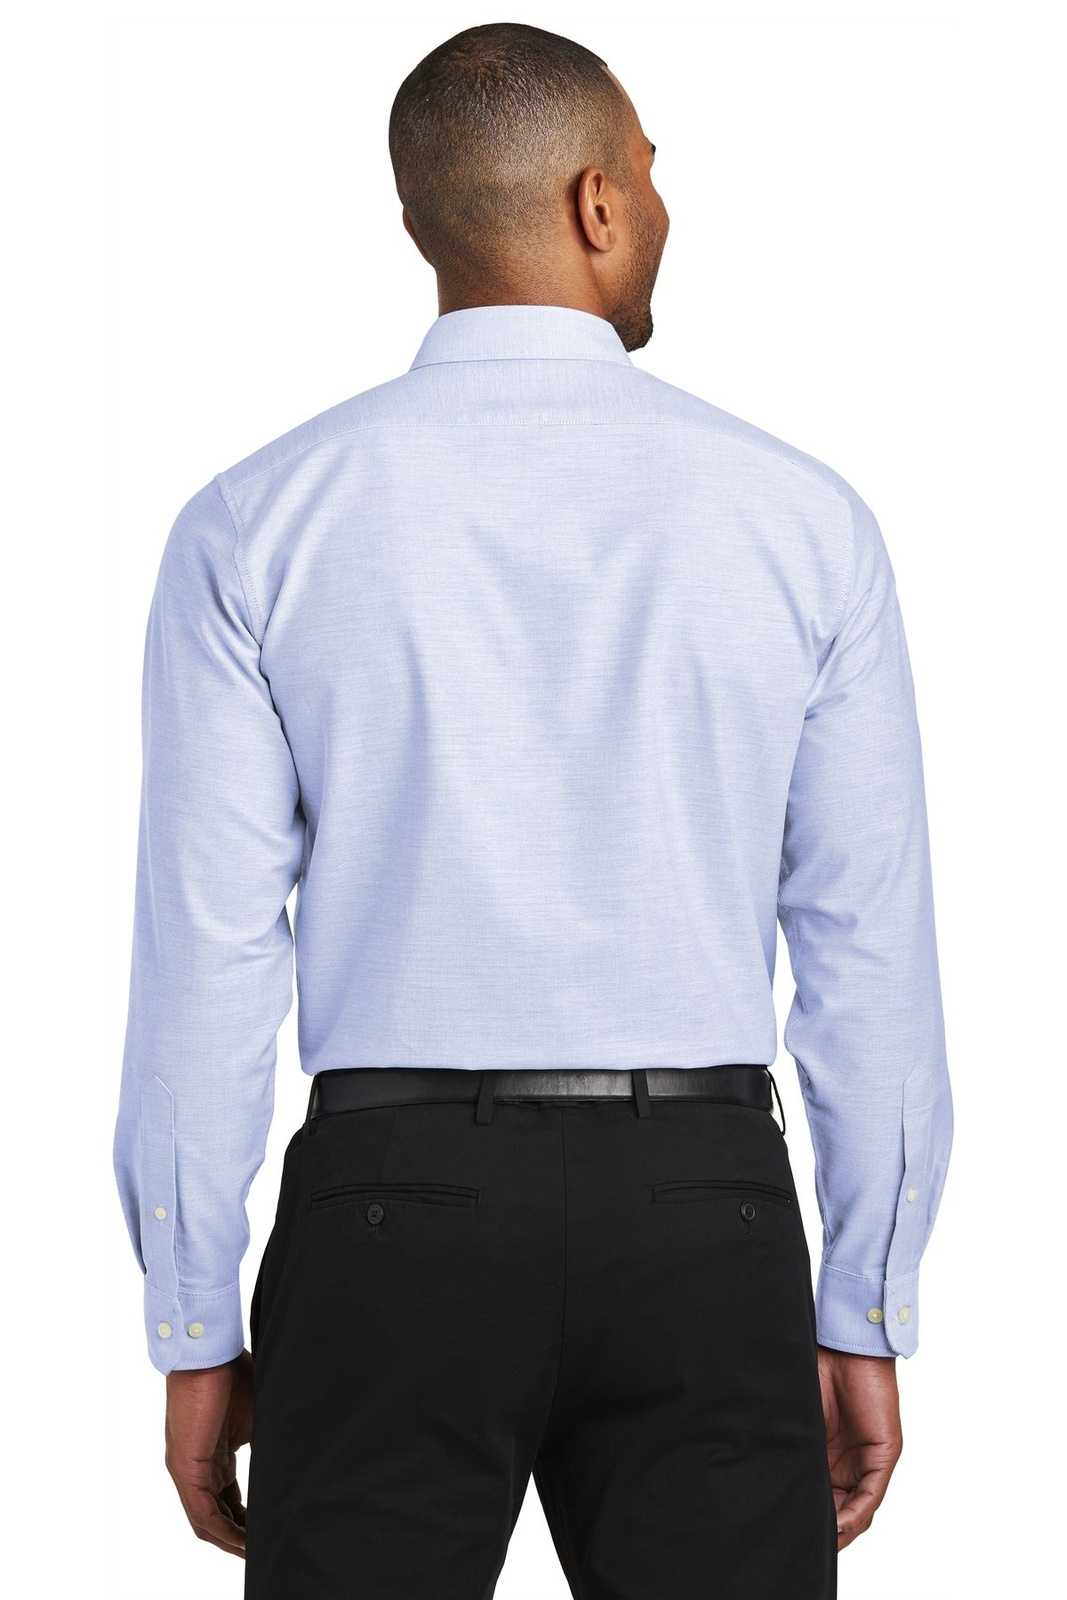 Port Authority S661 Slim Fit Superpro Oxford Shirt - Oxford Blue - HIT a Double - 1